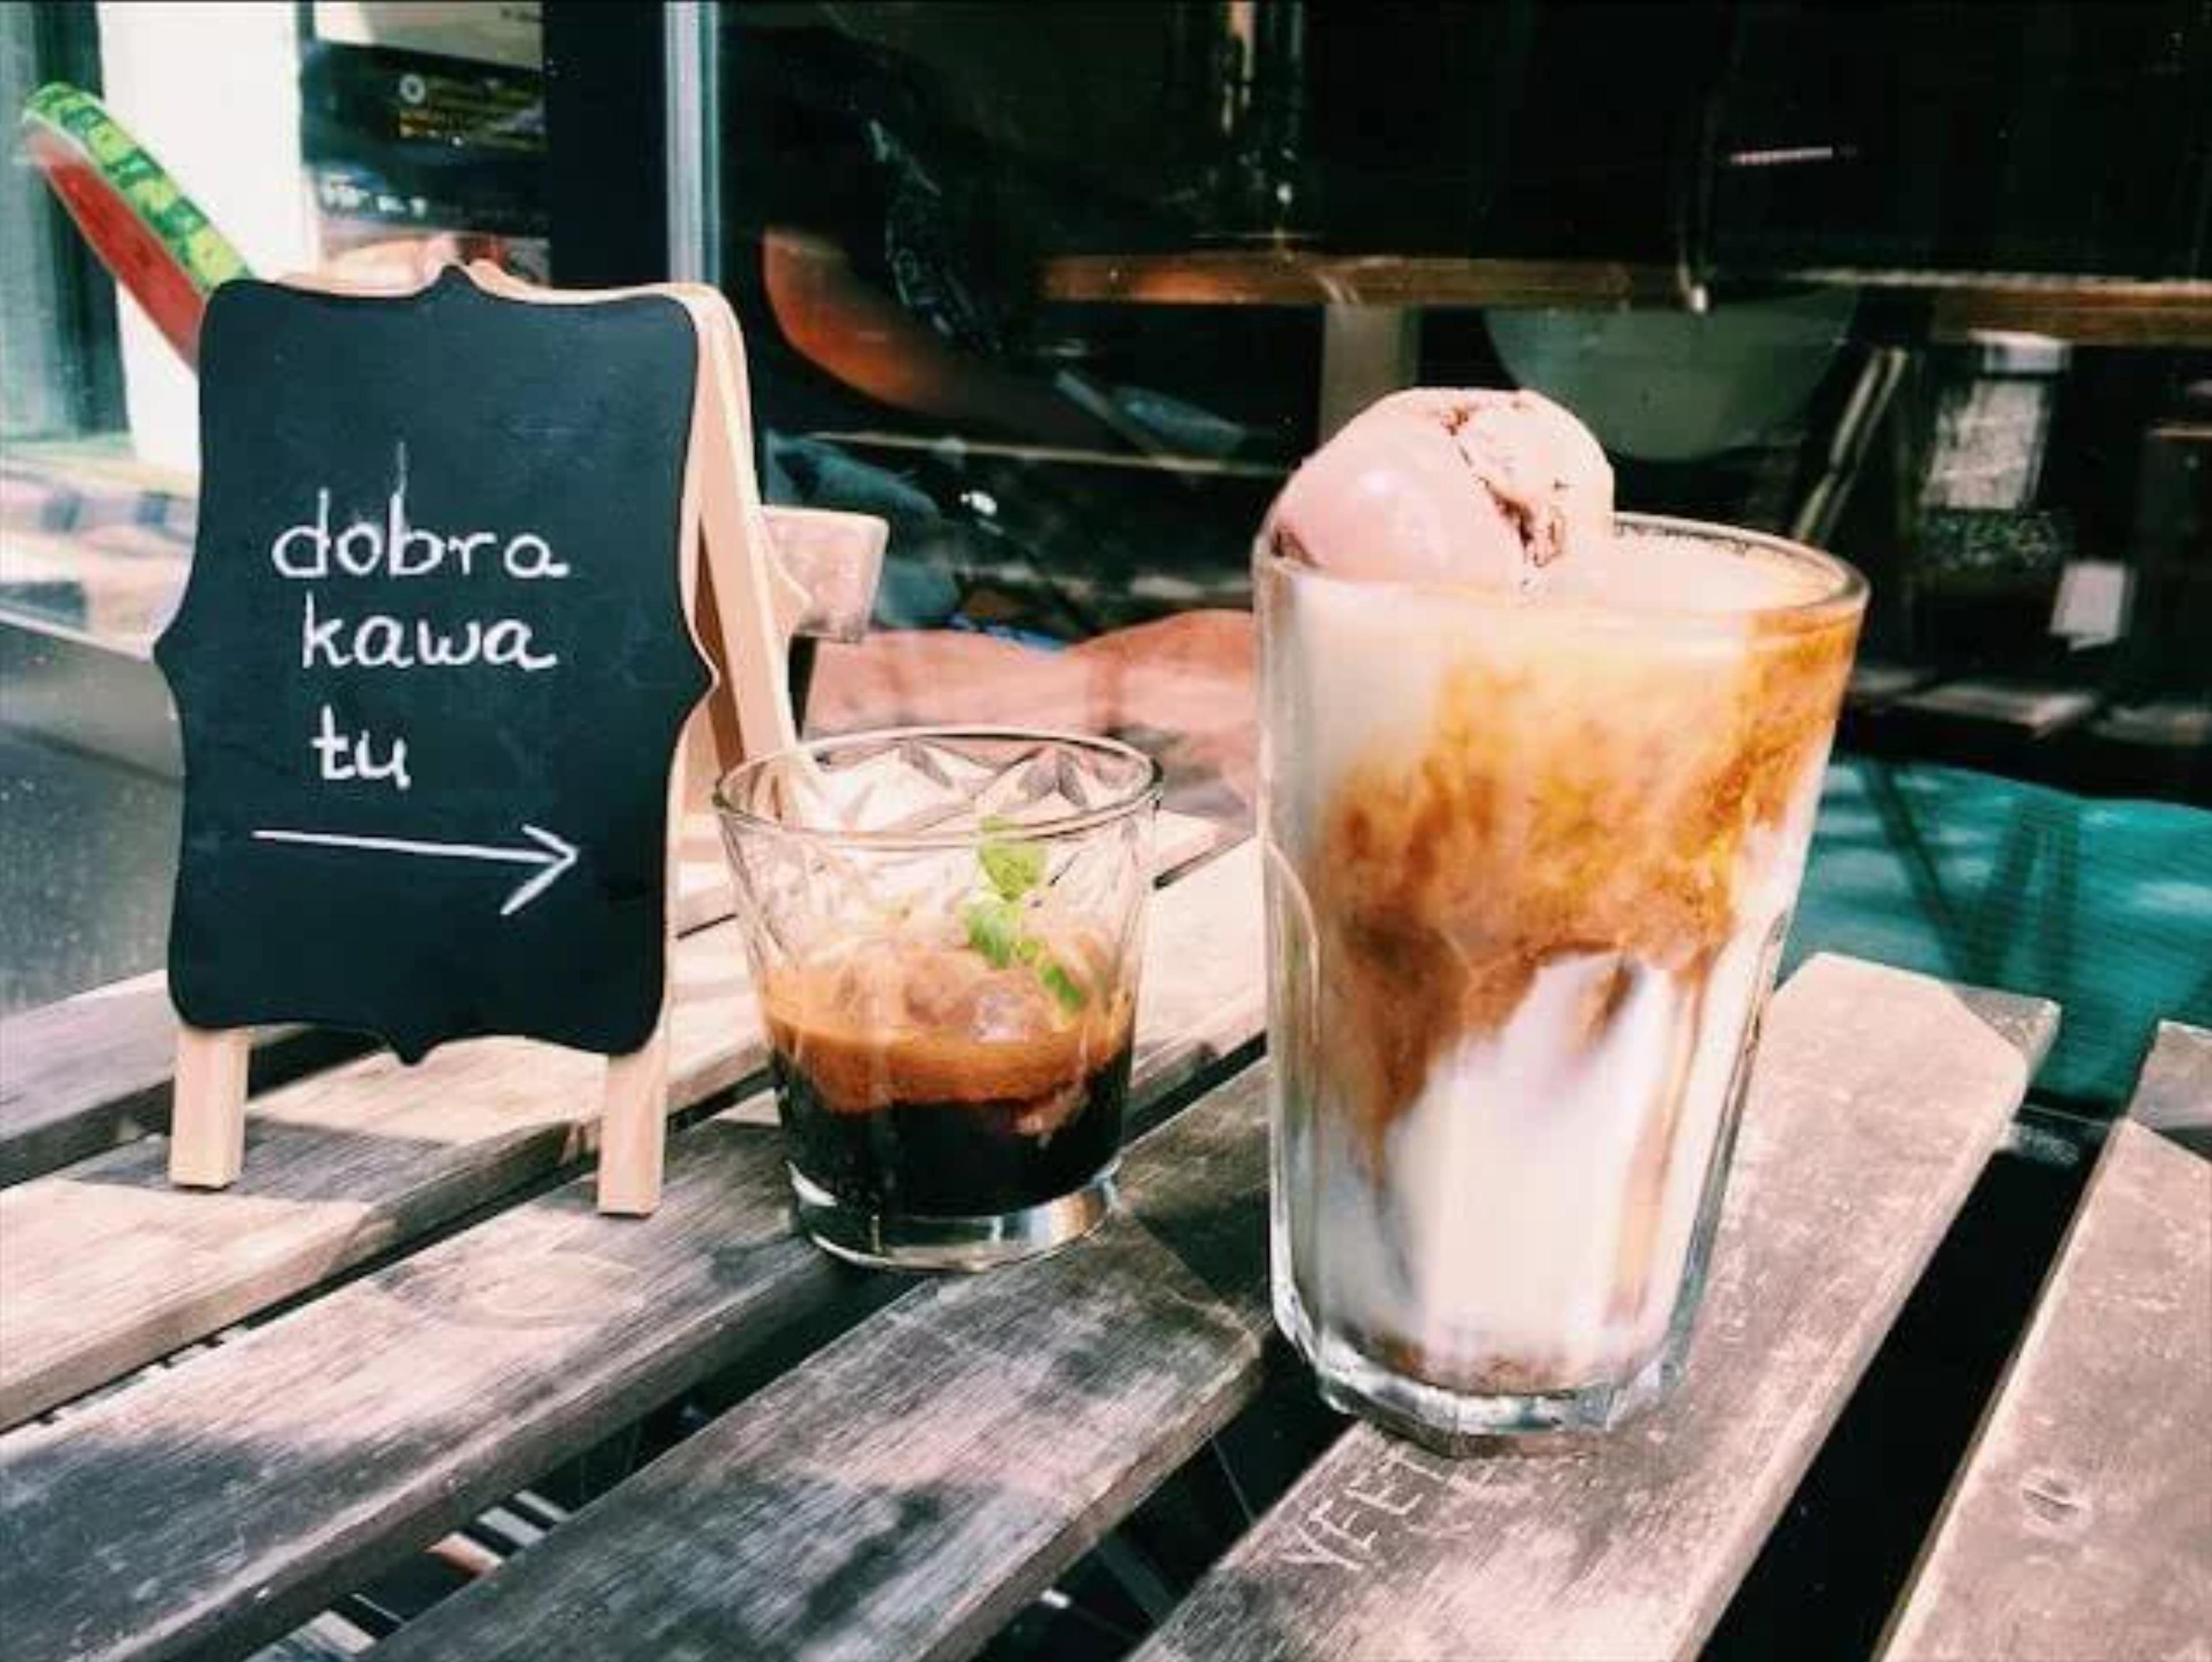 Kawa z lodami oraz druga espresso na stoliku obok napis "dobra kawa tu"